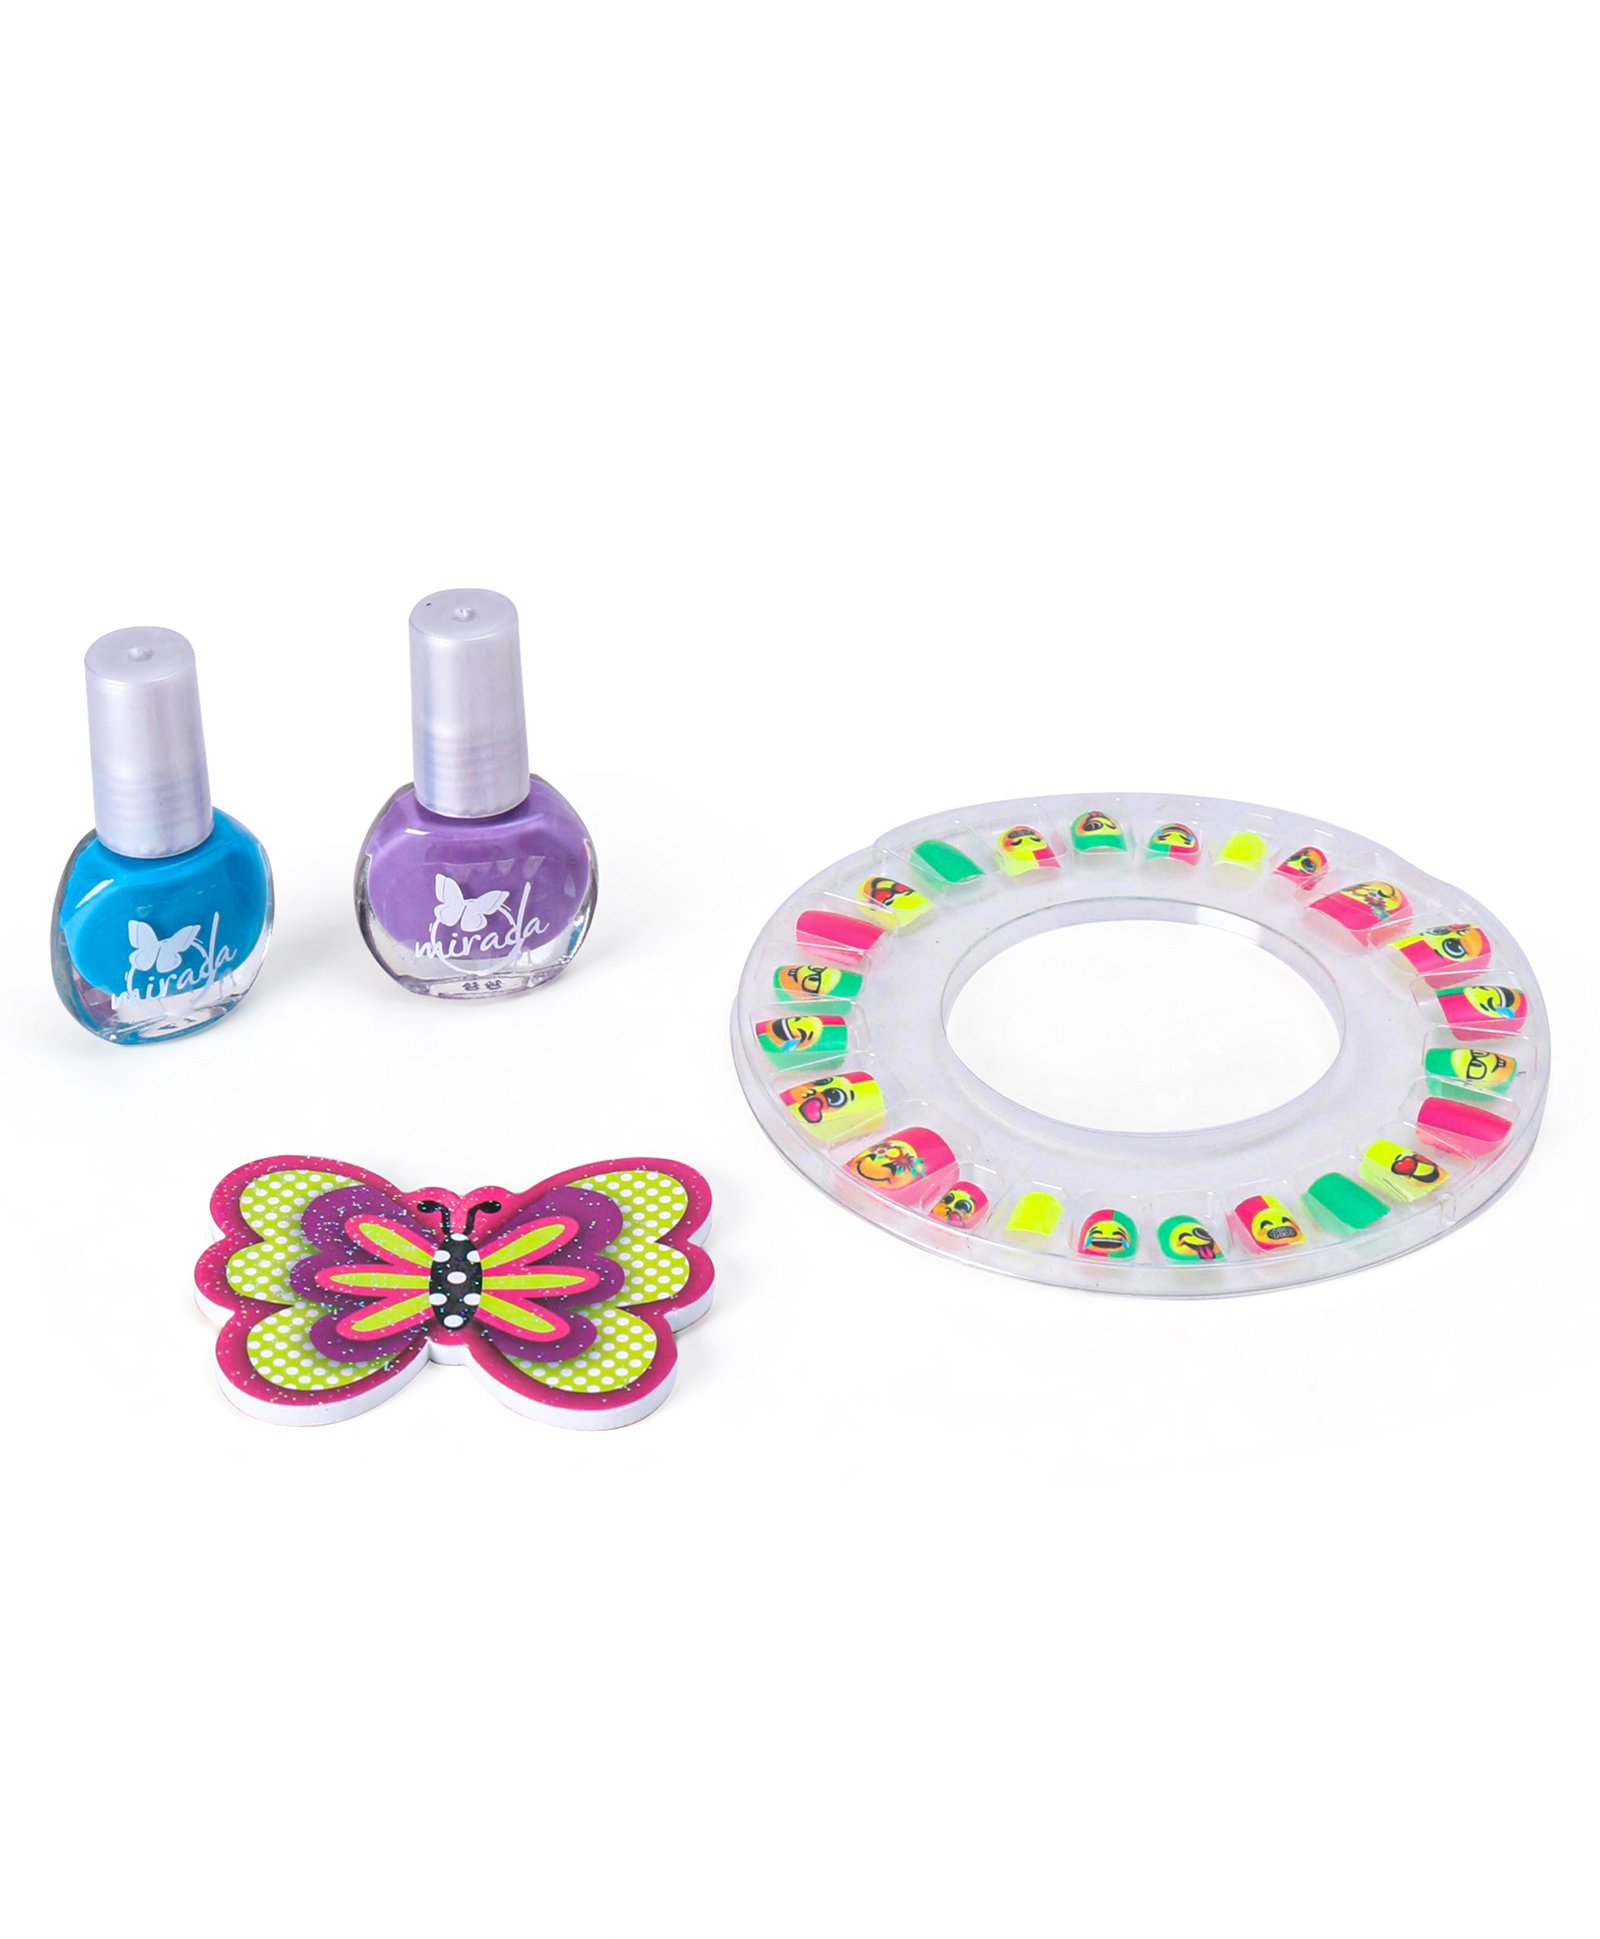 Mirada Press On Nails Love Kit Color May Vary Online India, Buy Art &  Creativity Toys for (6-10 Years) at  - 9142285